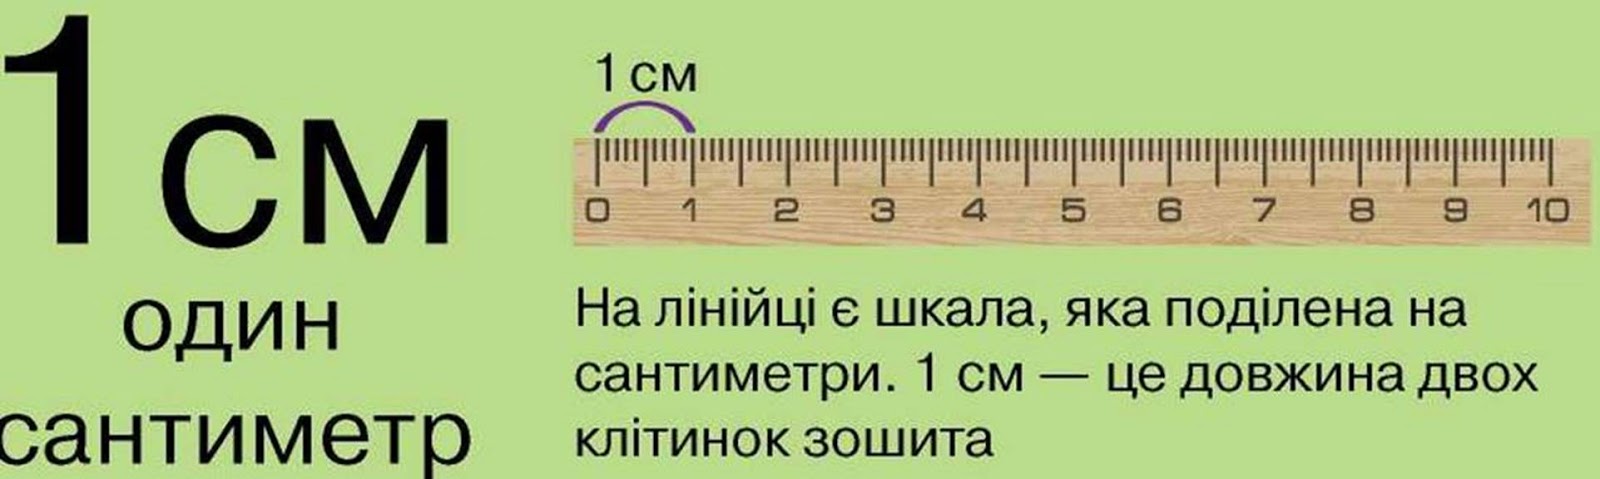 1 дециметр 20 сантиметров